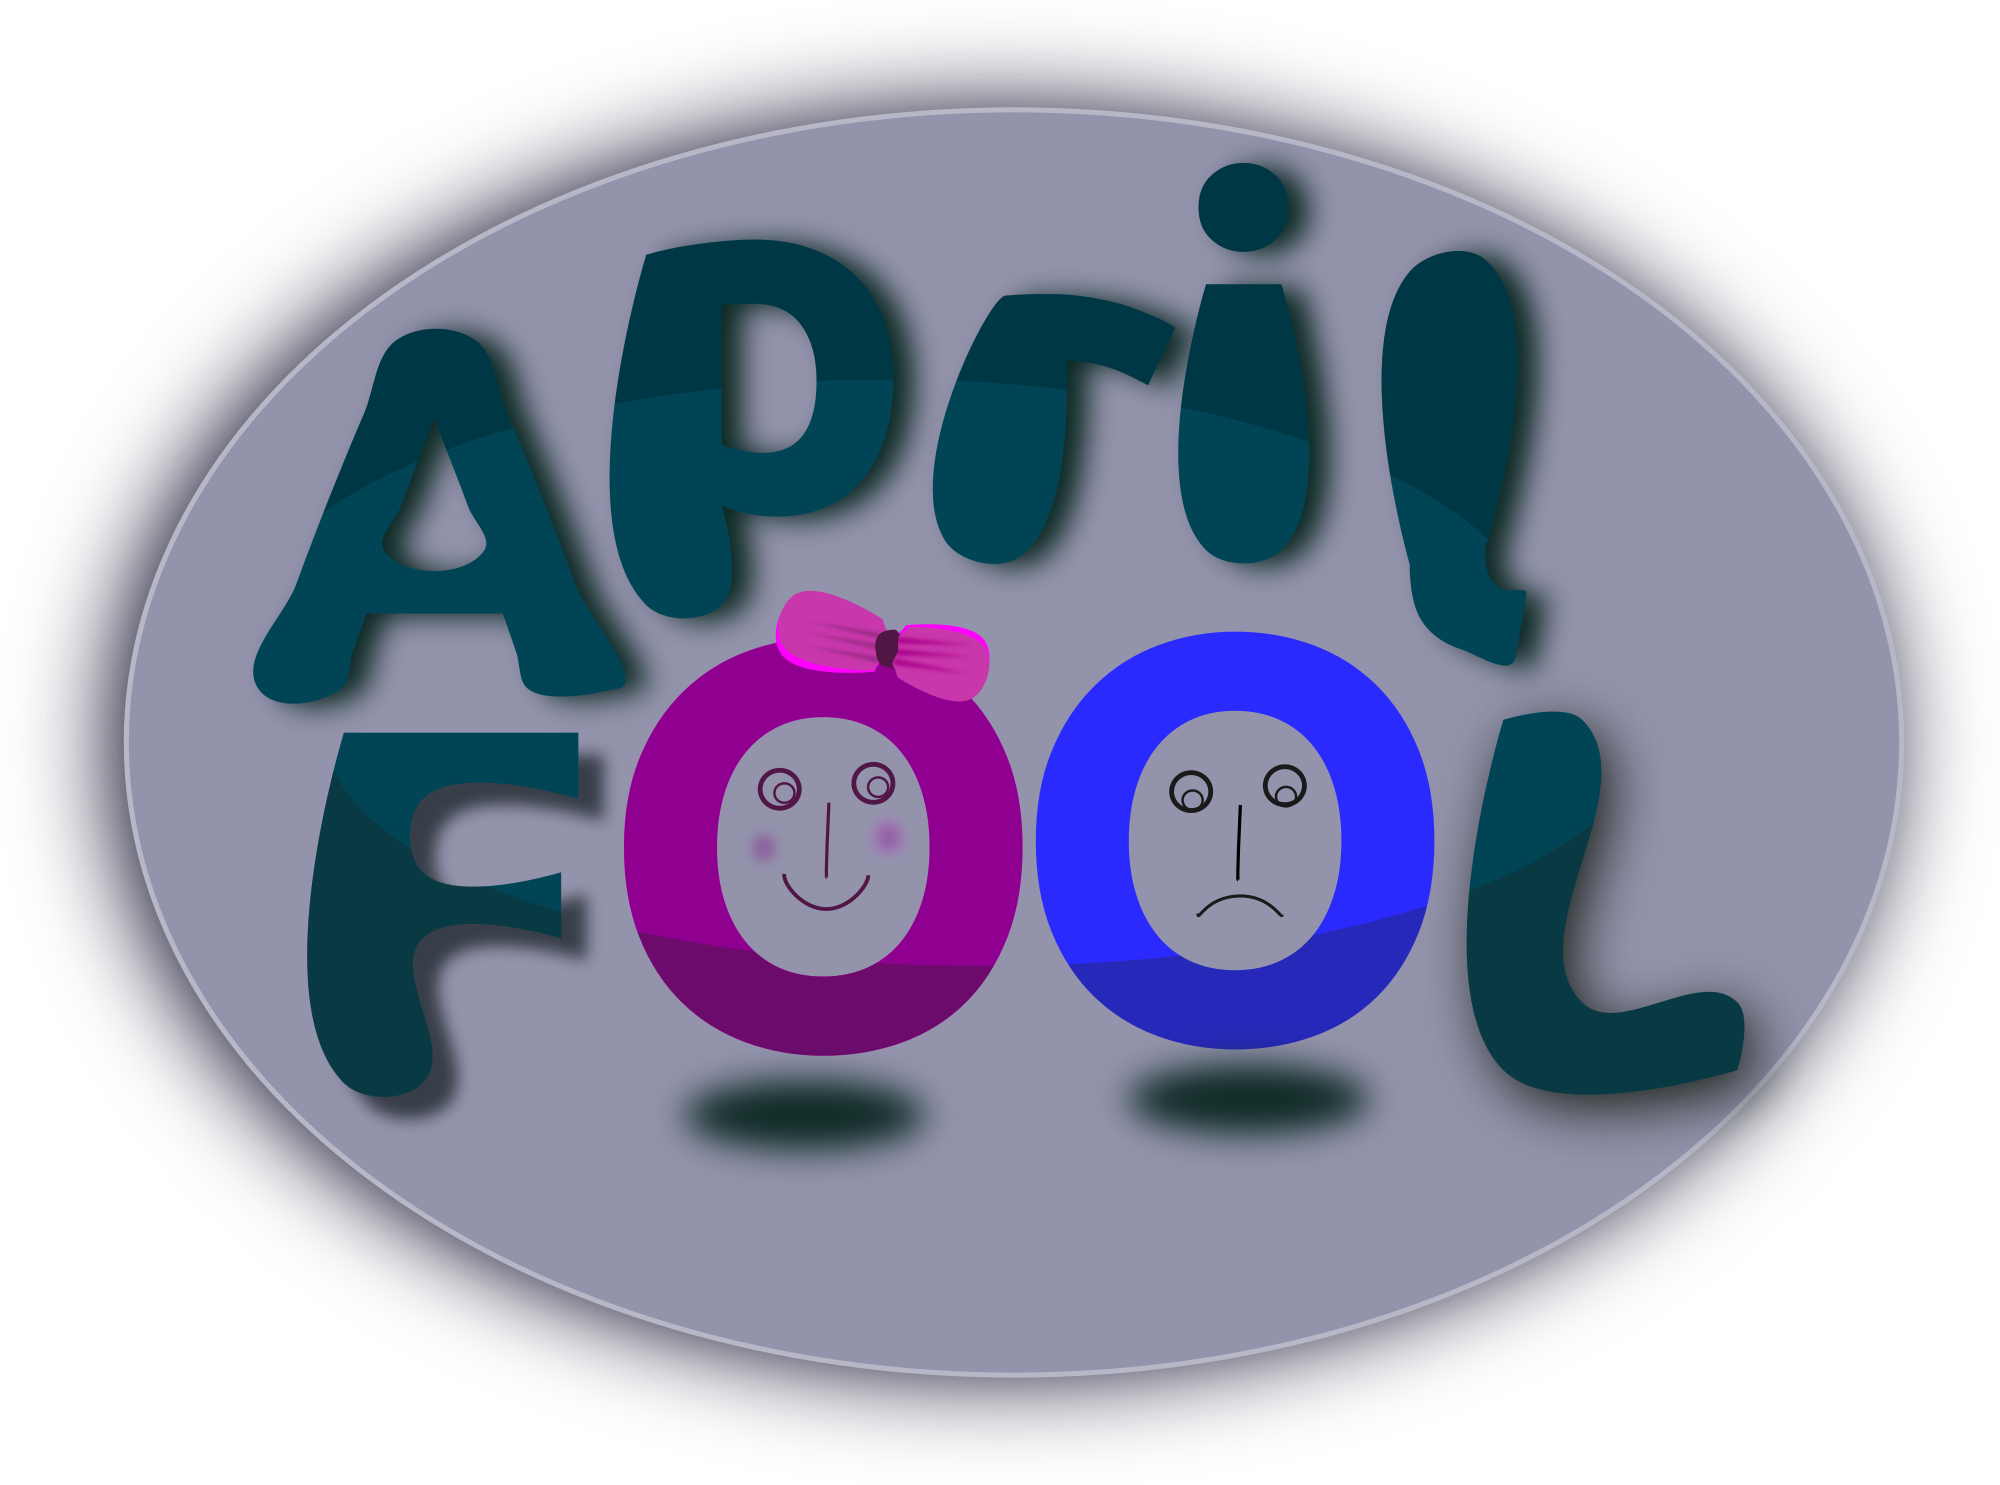 April Fool's Day tribute